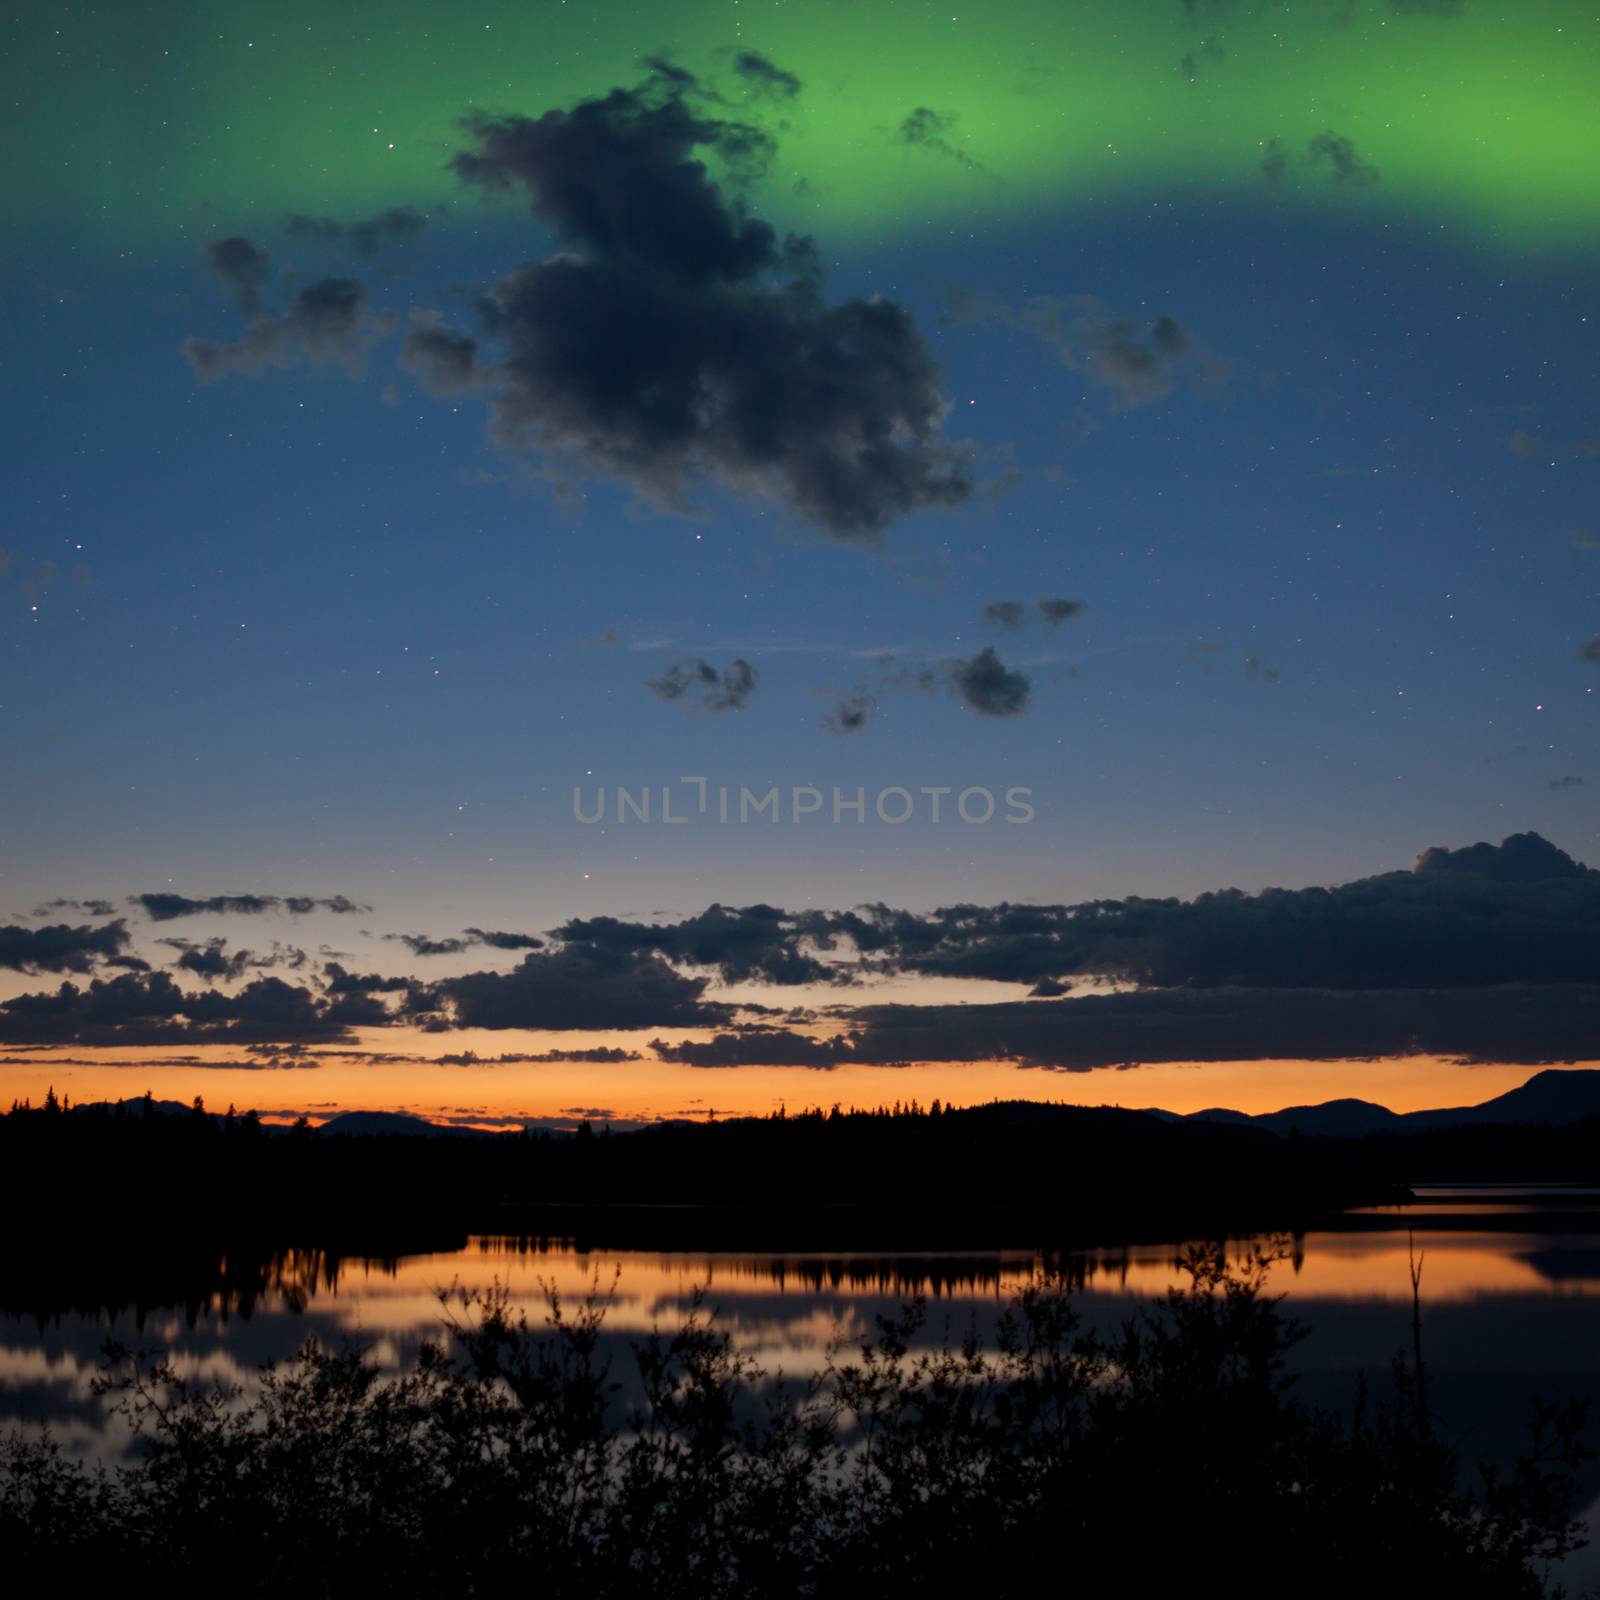 Northern lights Aurora borealis at midnight in summer over northern horizon of Lake Laberge Yukon Territory Canada midnight sun just below